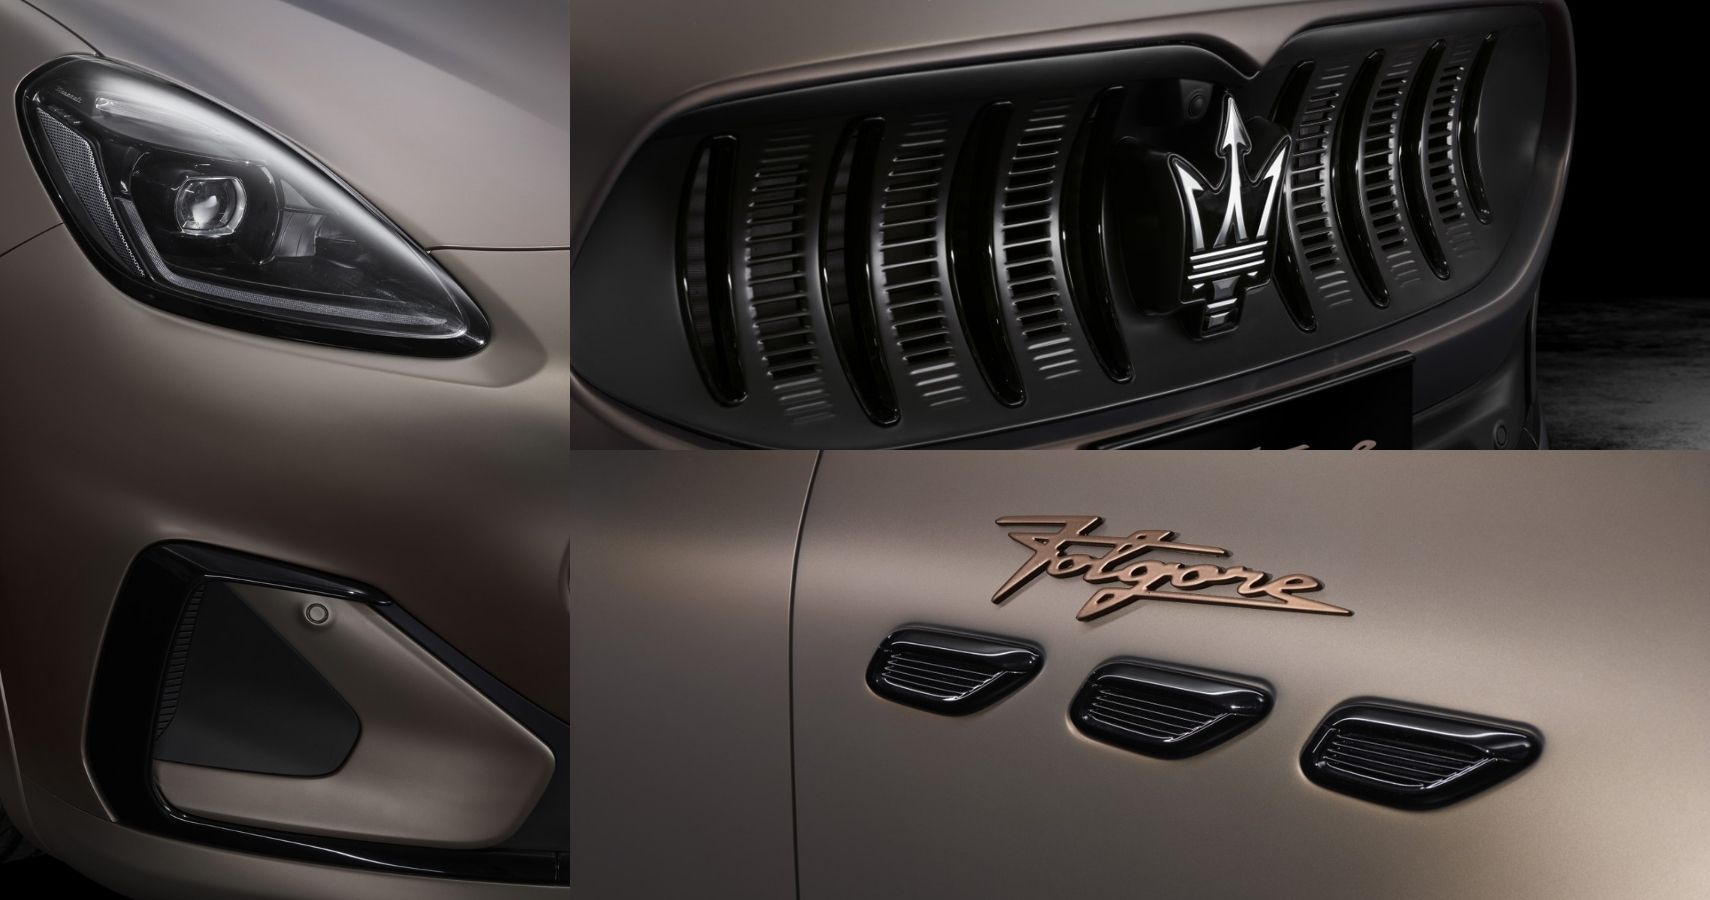 Maserati Grecale Folgore exterior features close-up view